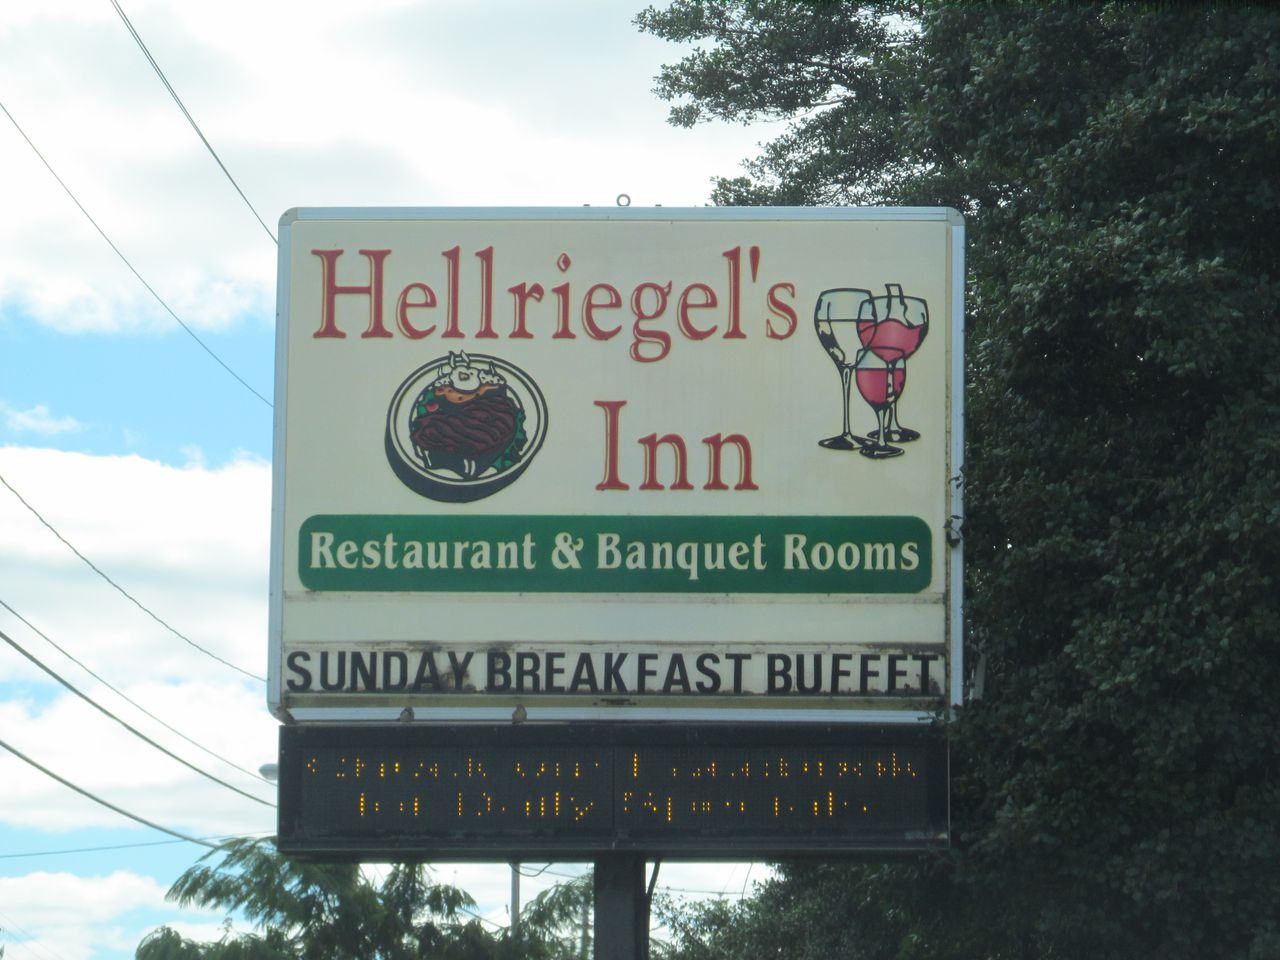 Hellriegel’s Inn in Painesville